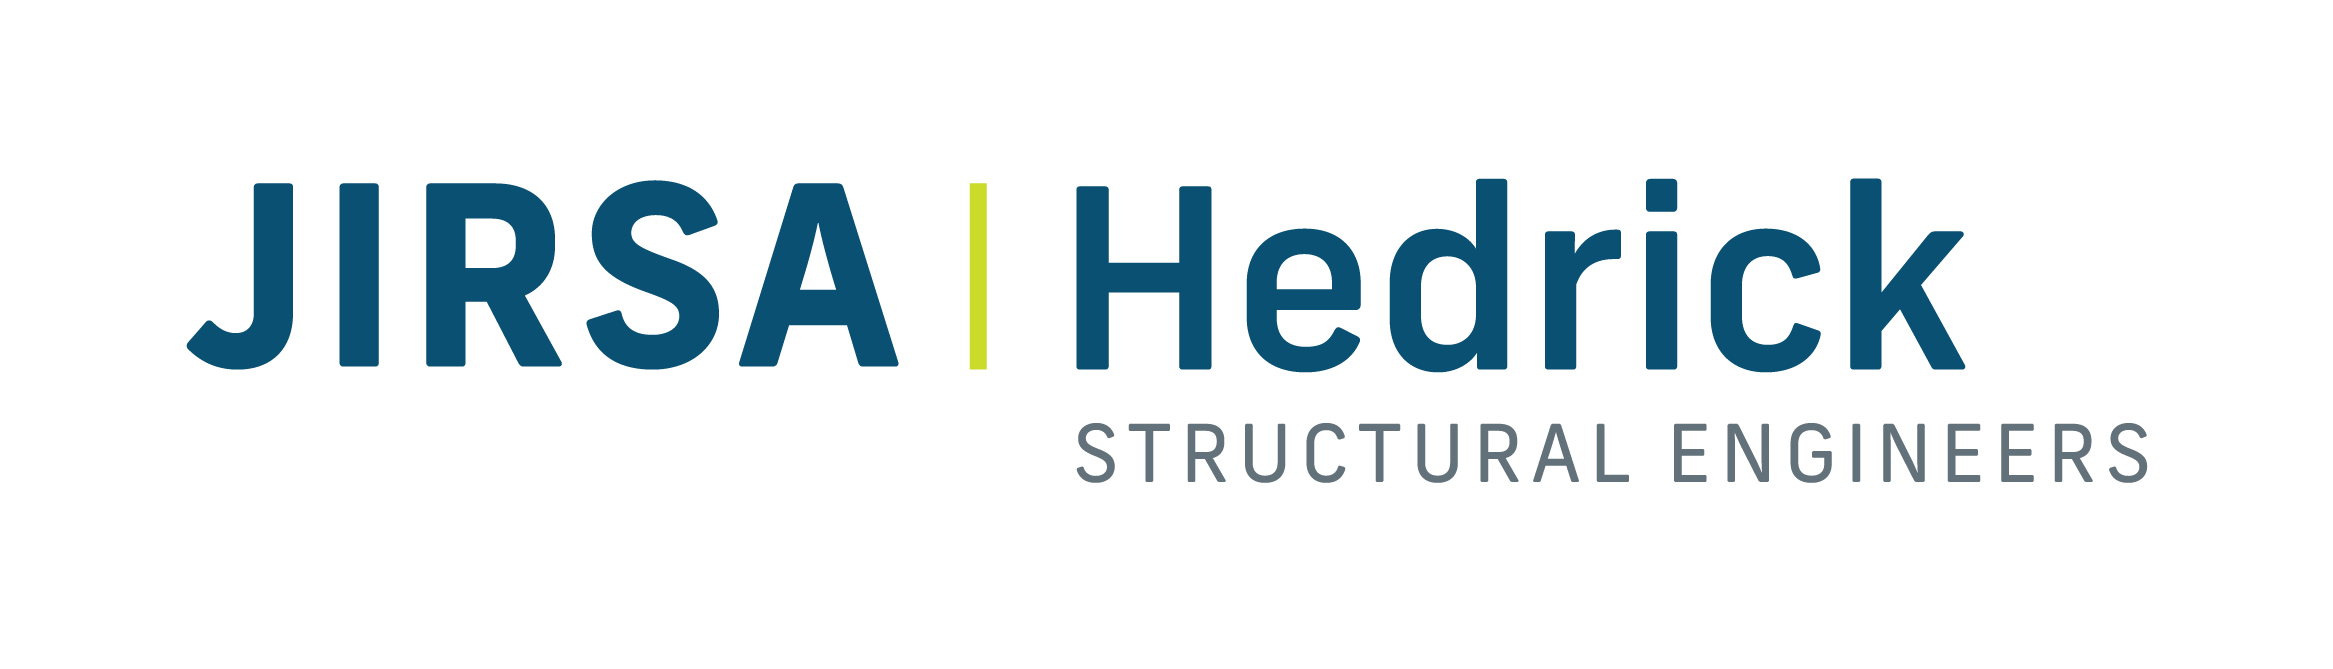 Jirsa Hedrick Structural Engineers